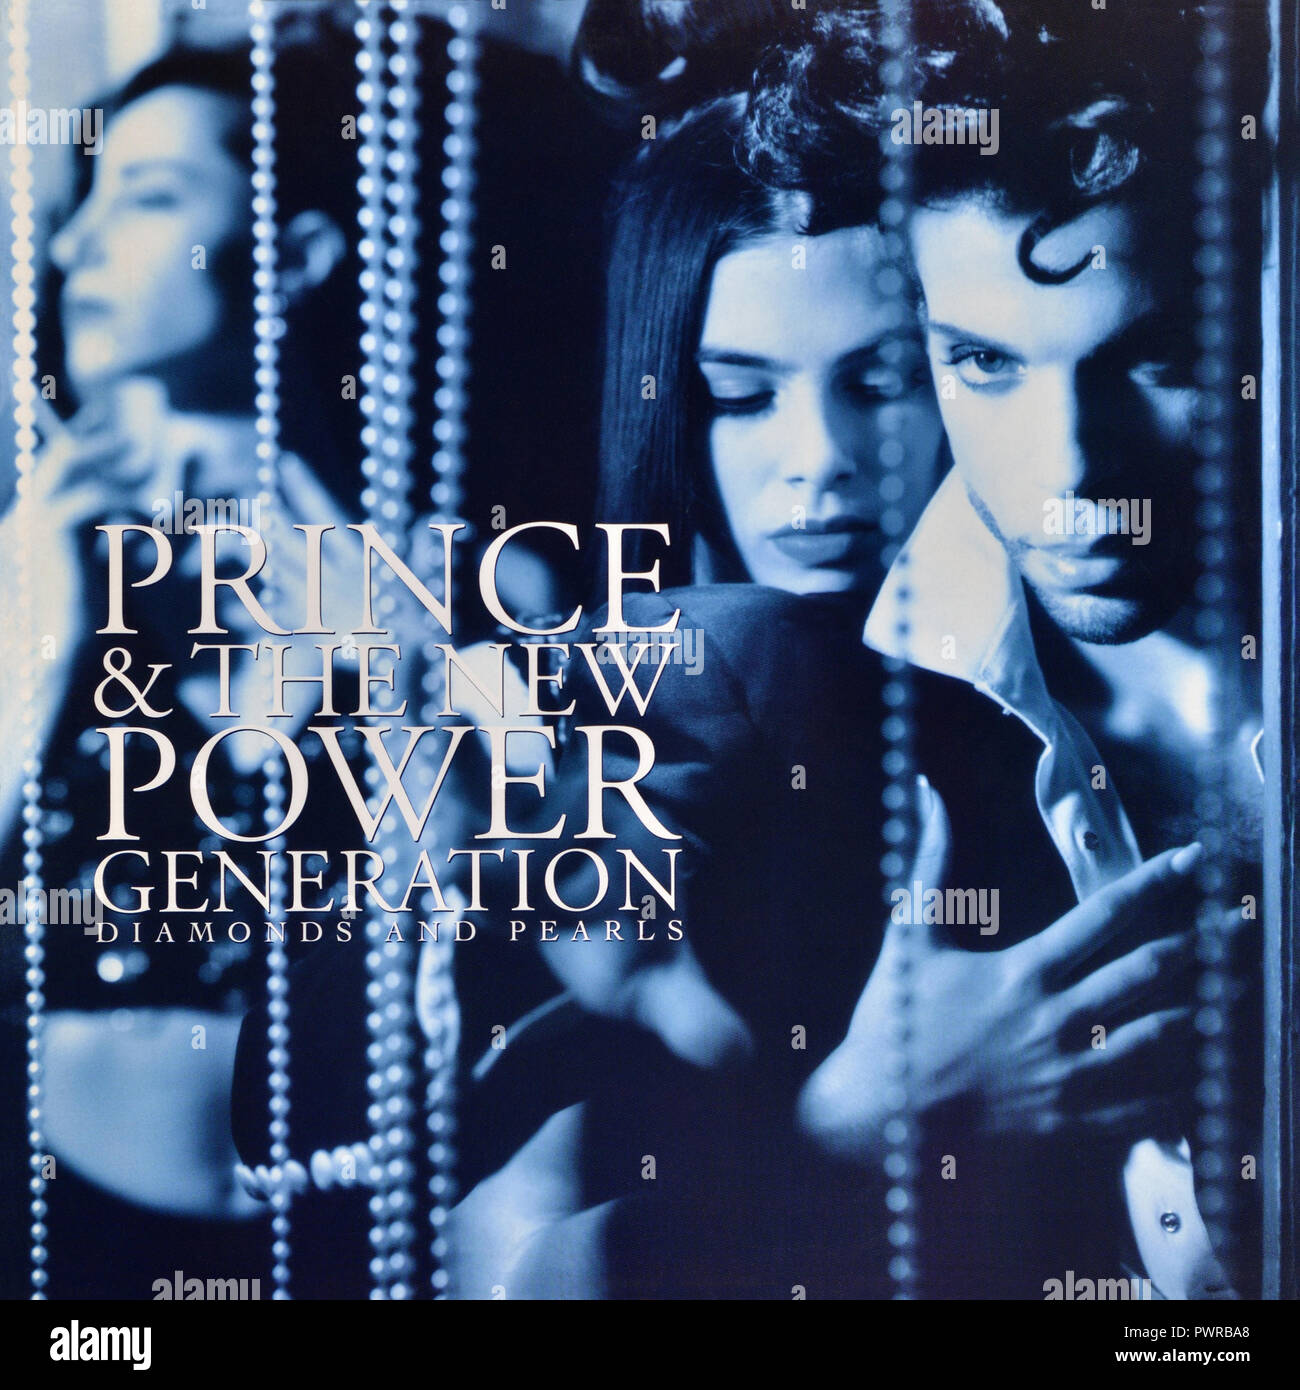 Prince & The New Power Generation - original Vinyl Album Cover - Diamonds and Pearls - 1991 Stockfoto